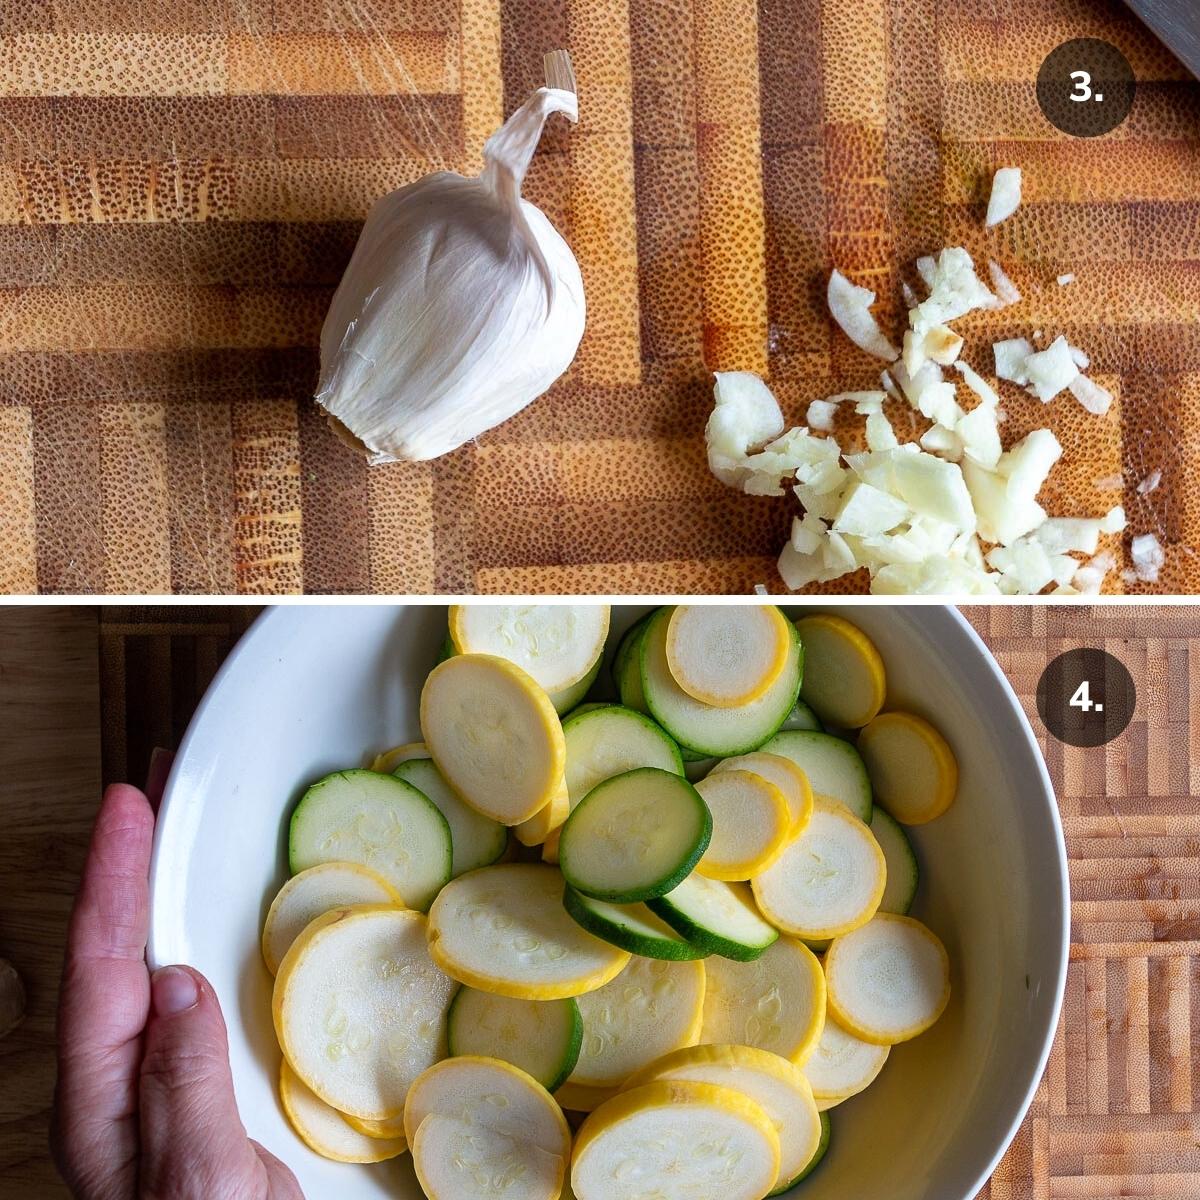 Mincing garlic and tossing veggies in garlic, olive oil and seasonings.